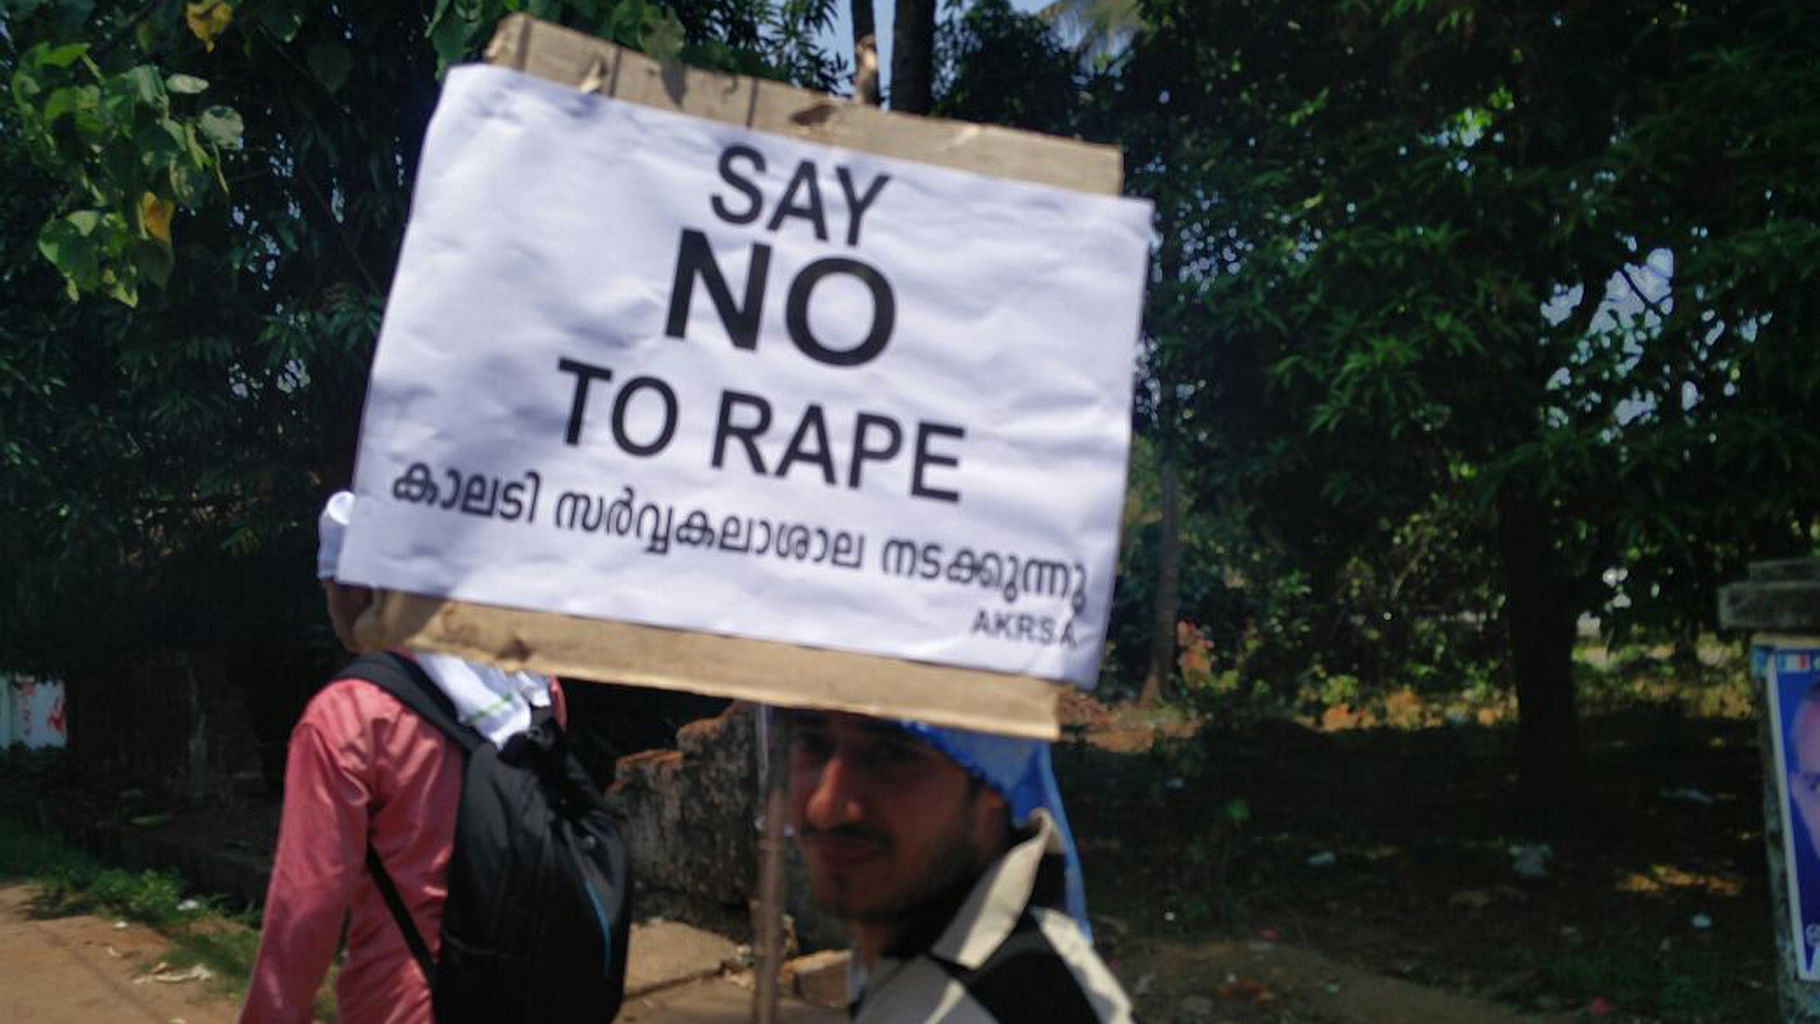 Image of anti-rape protest used for representational purposes.